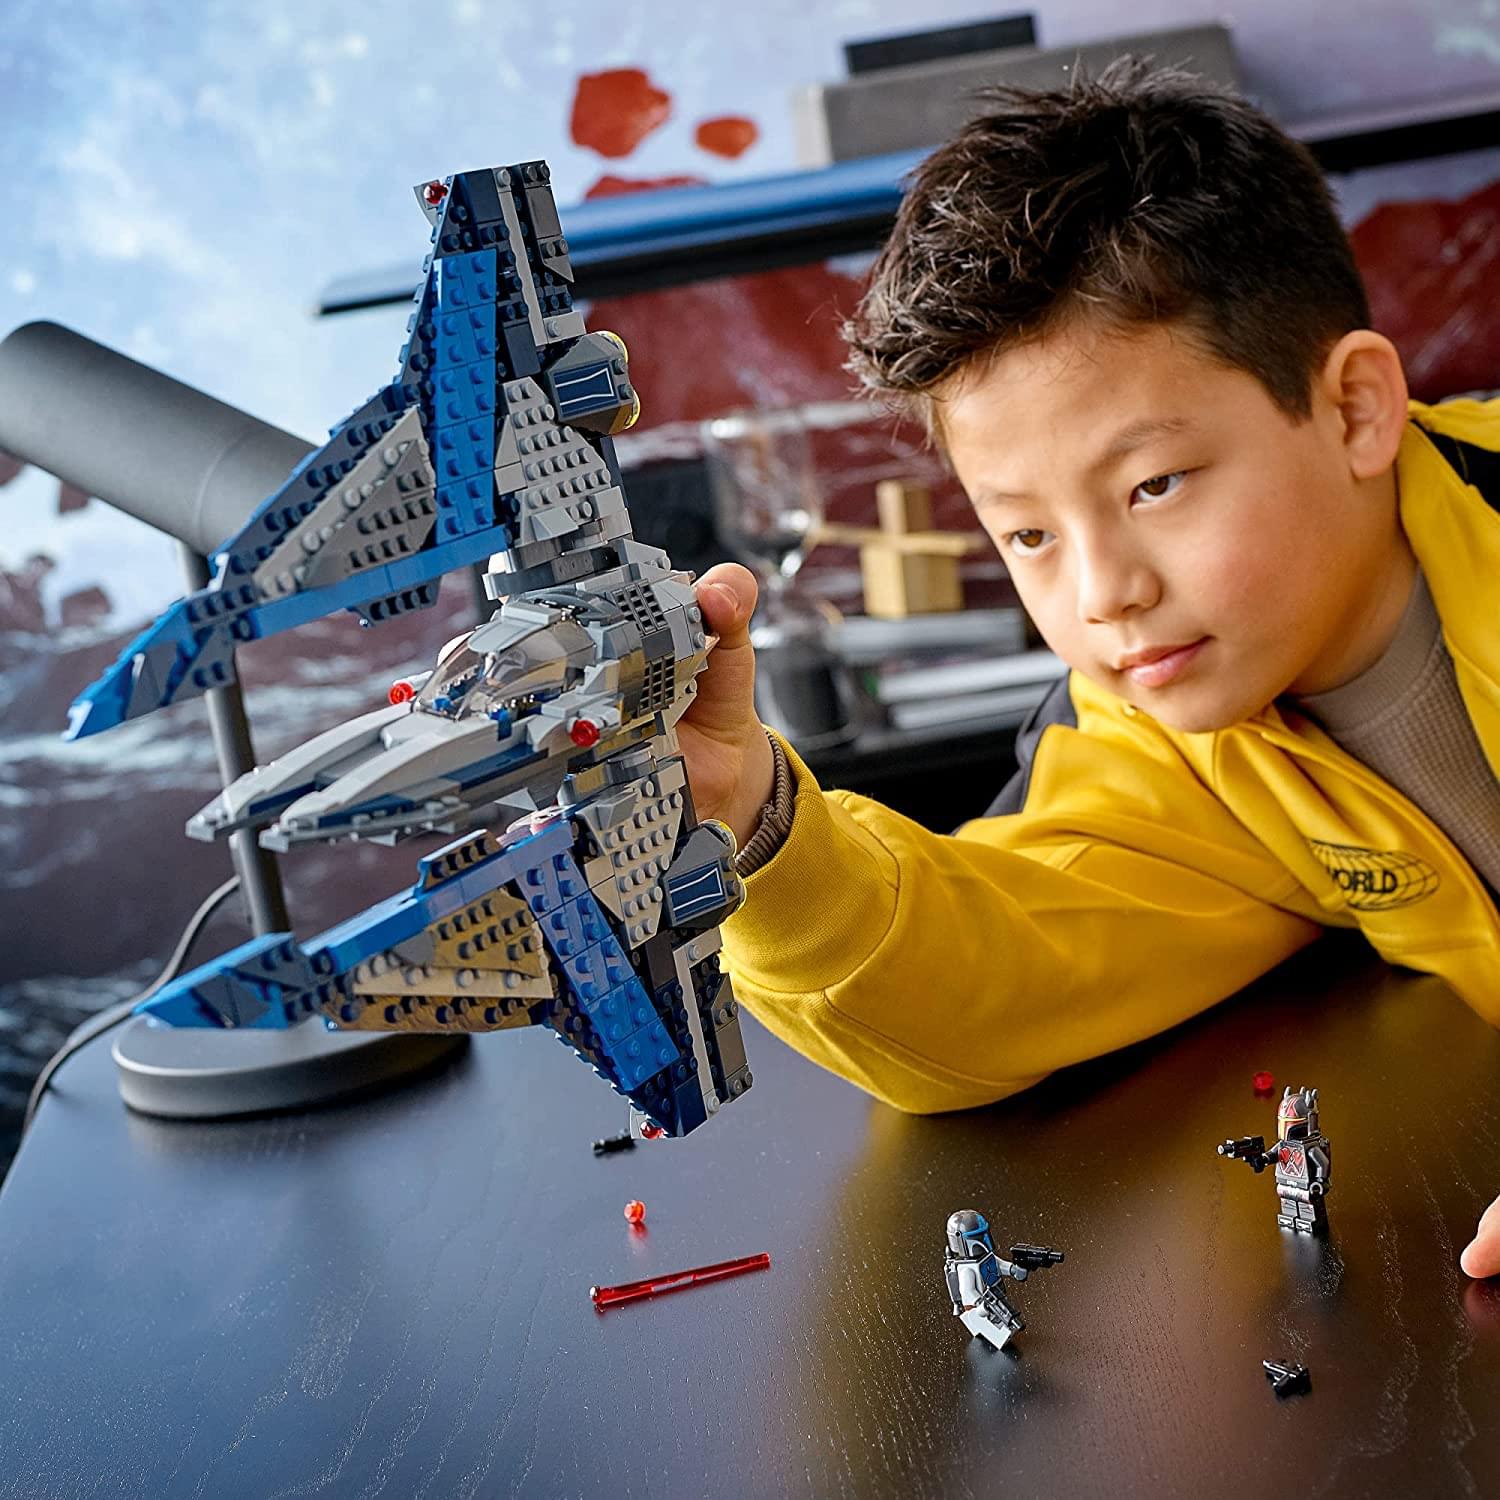 LEGO Star Wars 75316 Mandalorian Starfighter 544 Piece Building Kit